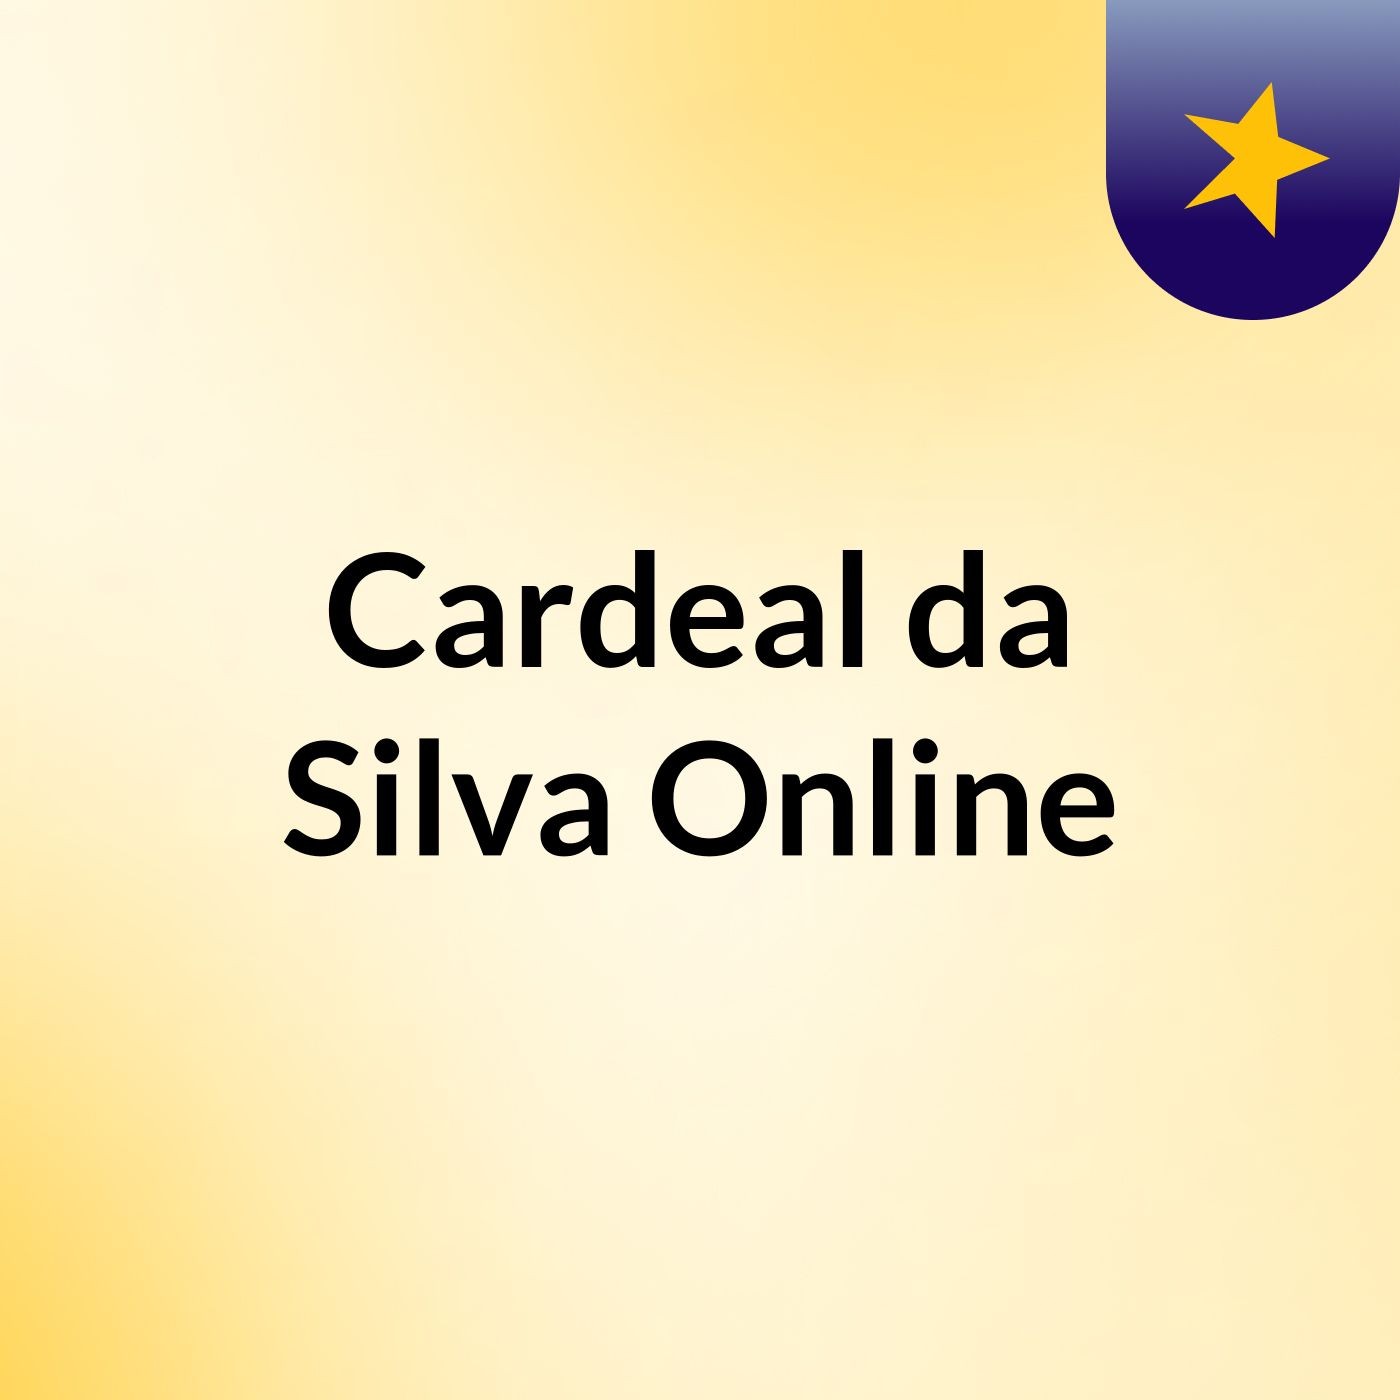 Cardeal da Silva Online